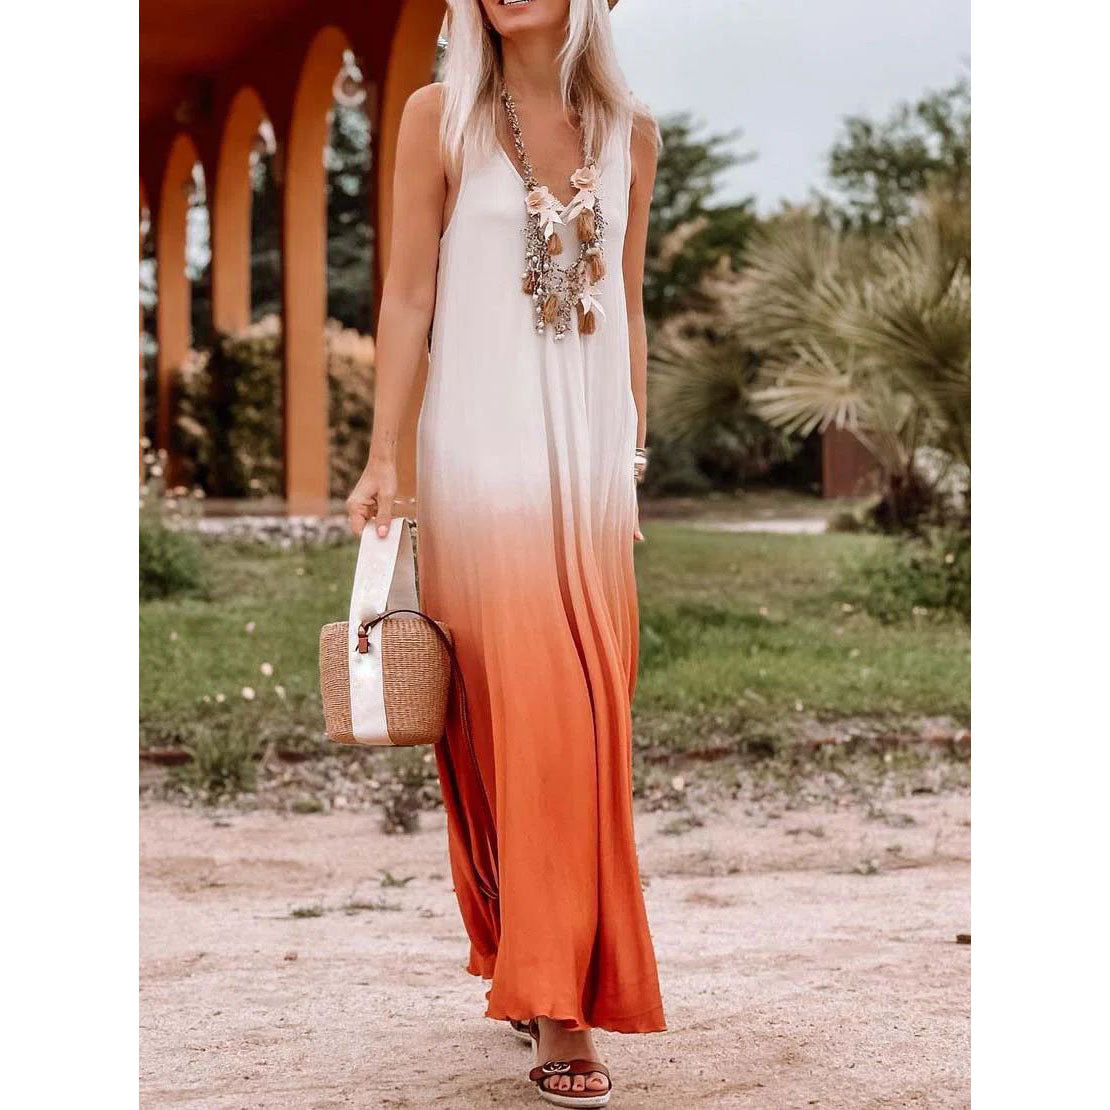 Orange Fashion Classy Long Dresses-Maxi Dreses-Free Shipping at meselling99